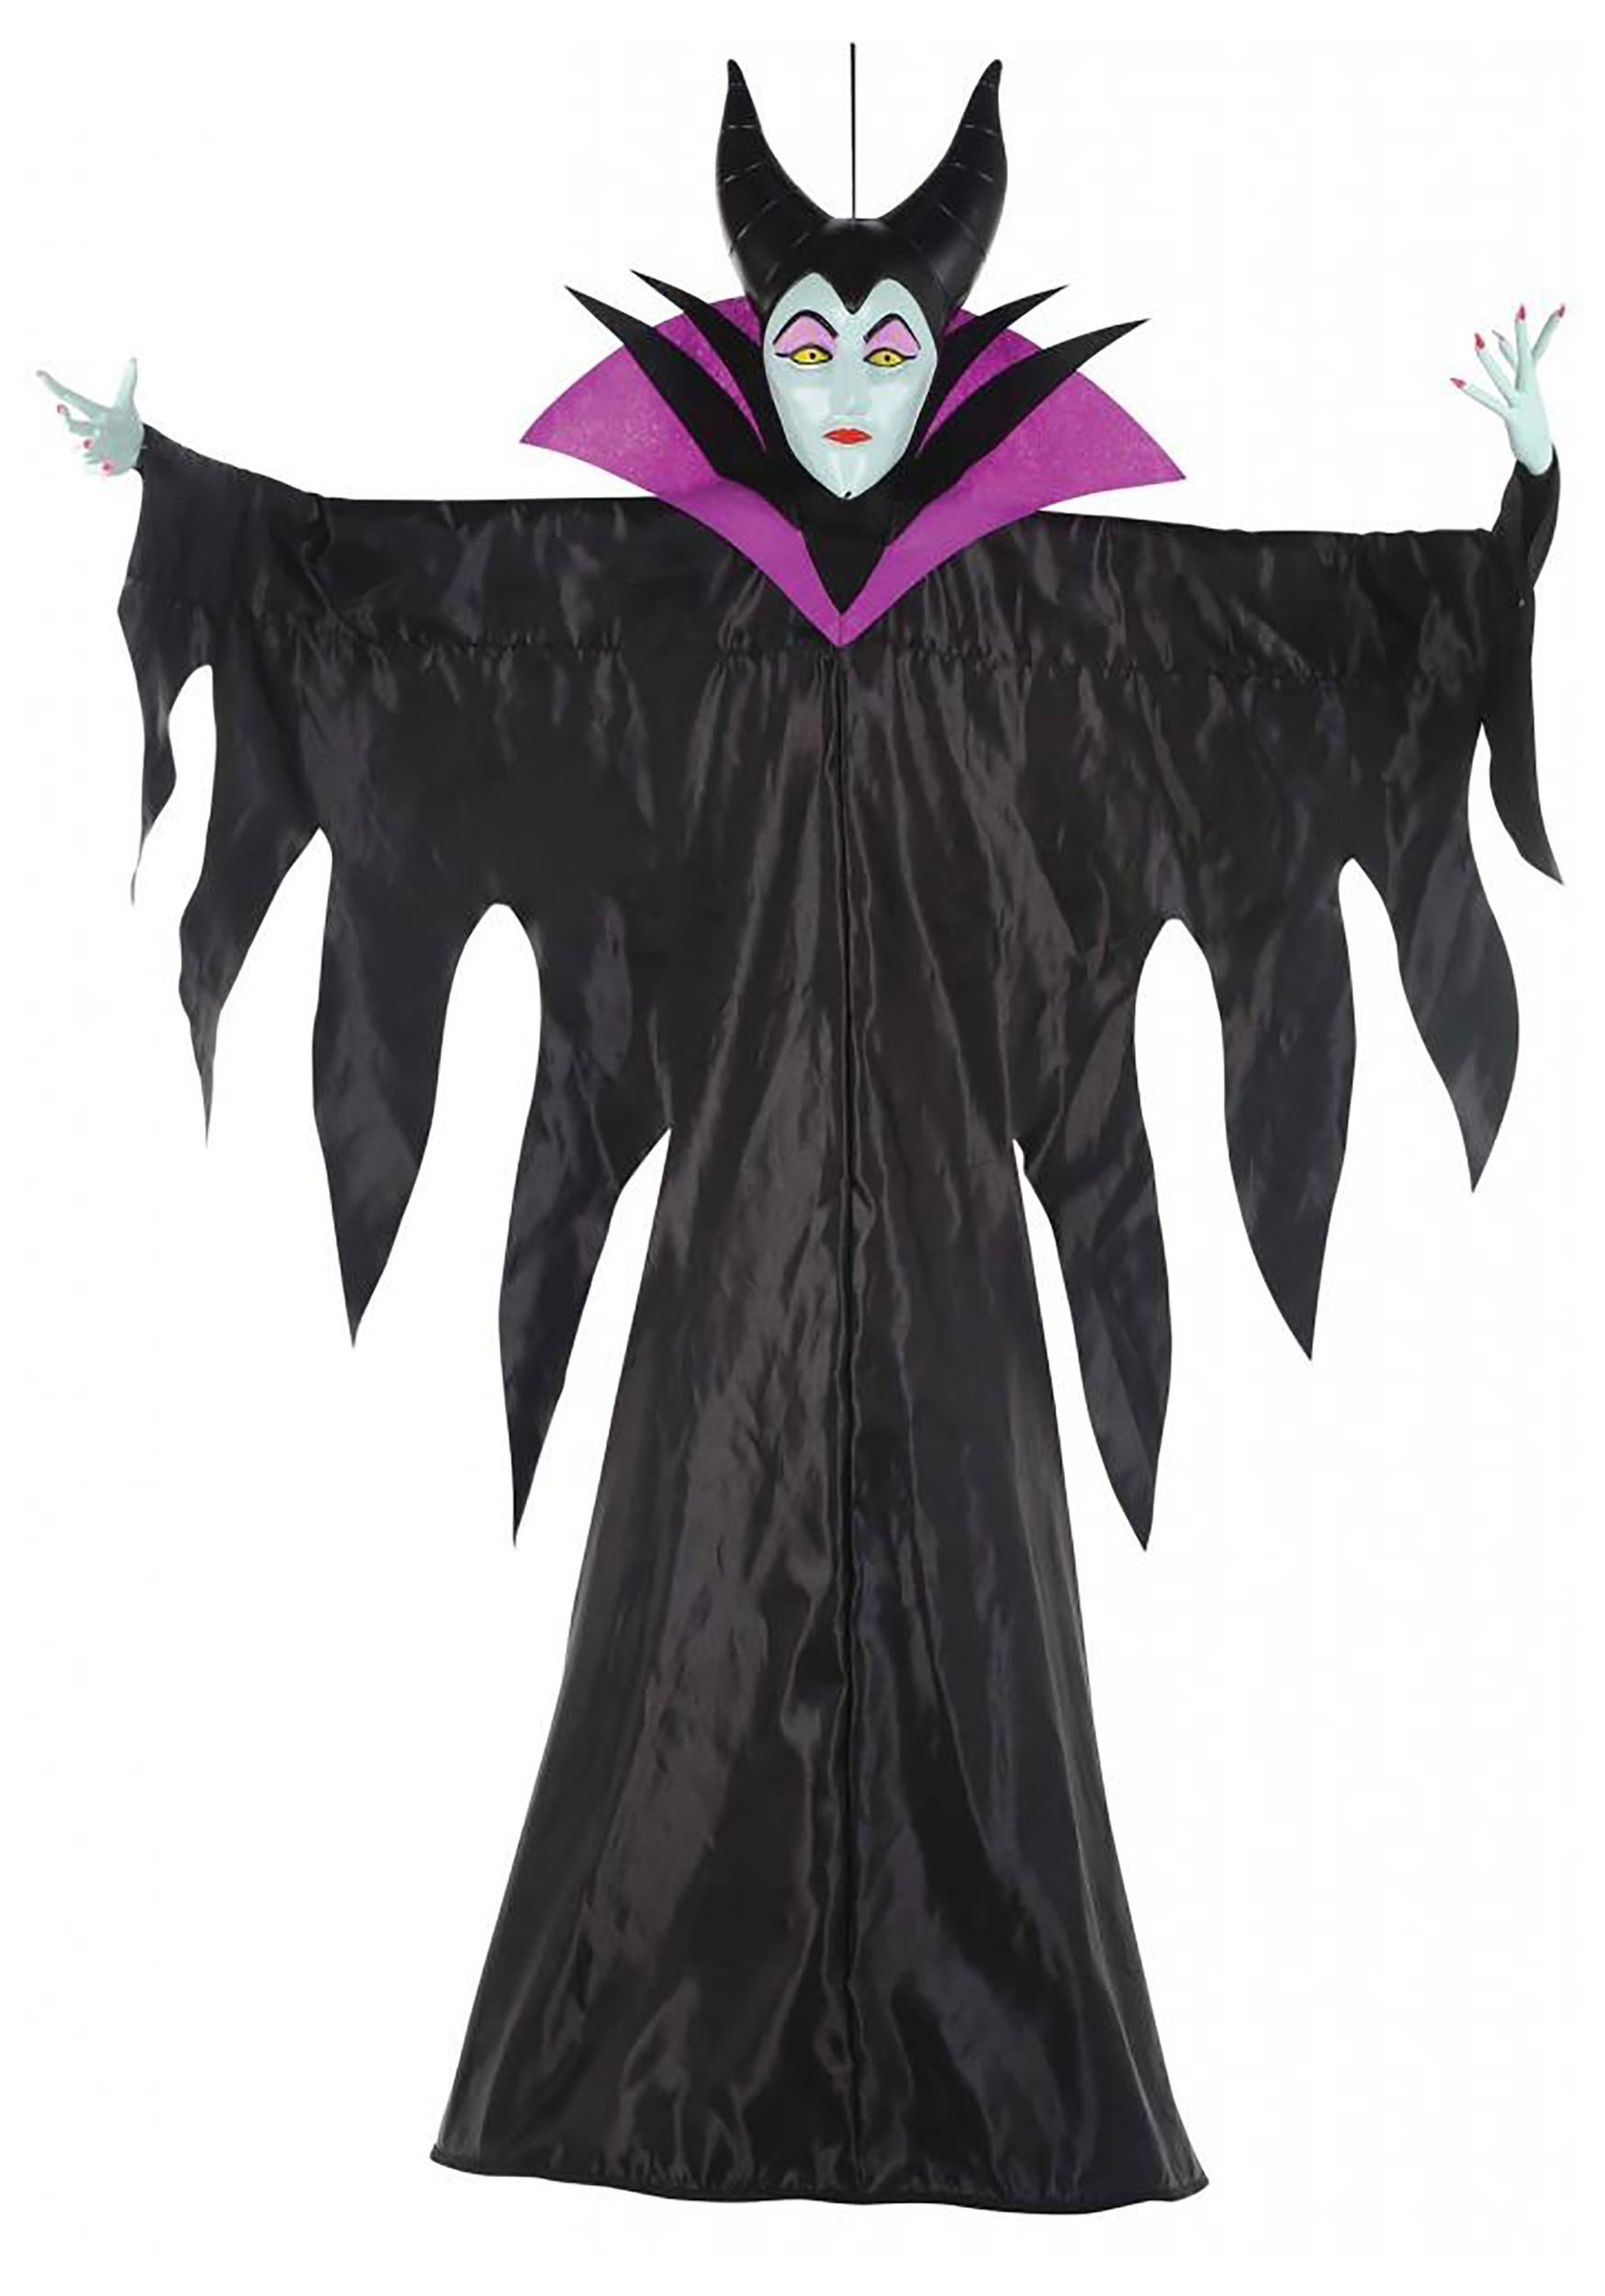 Disney Maleficent Hanging Prop Halloween Decoration